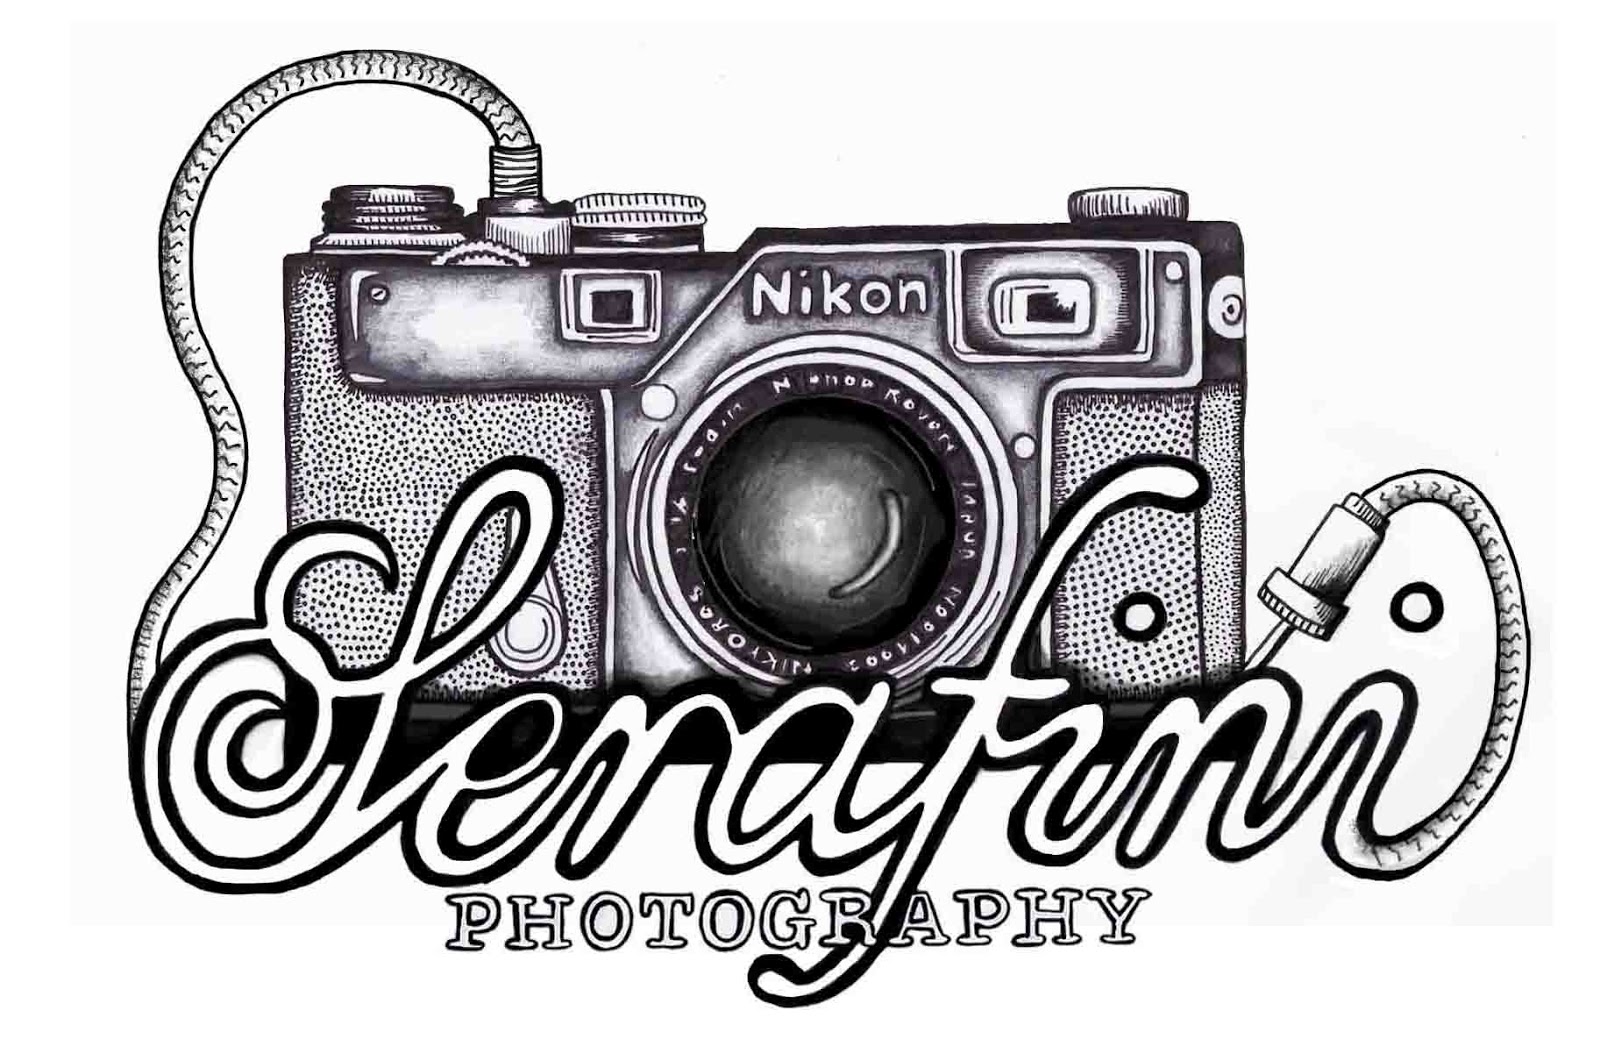 freelance photography vt cathy with an s: Logo design: Serafini Photography 